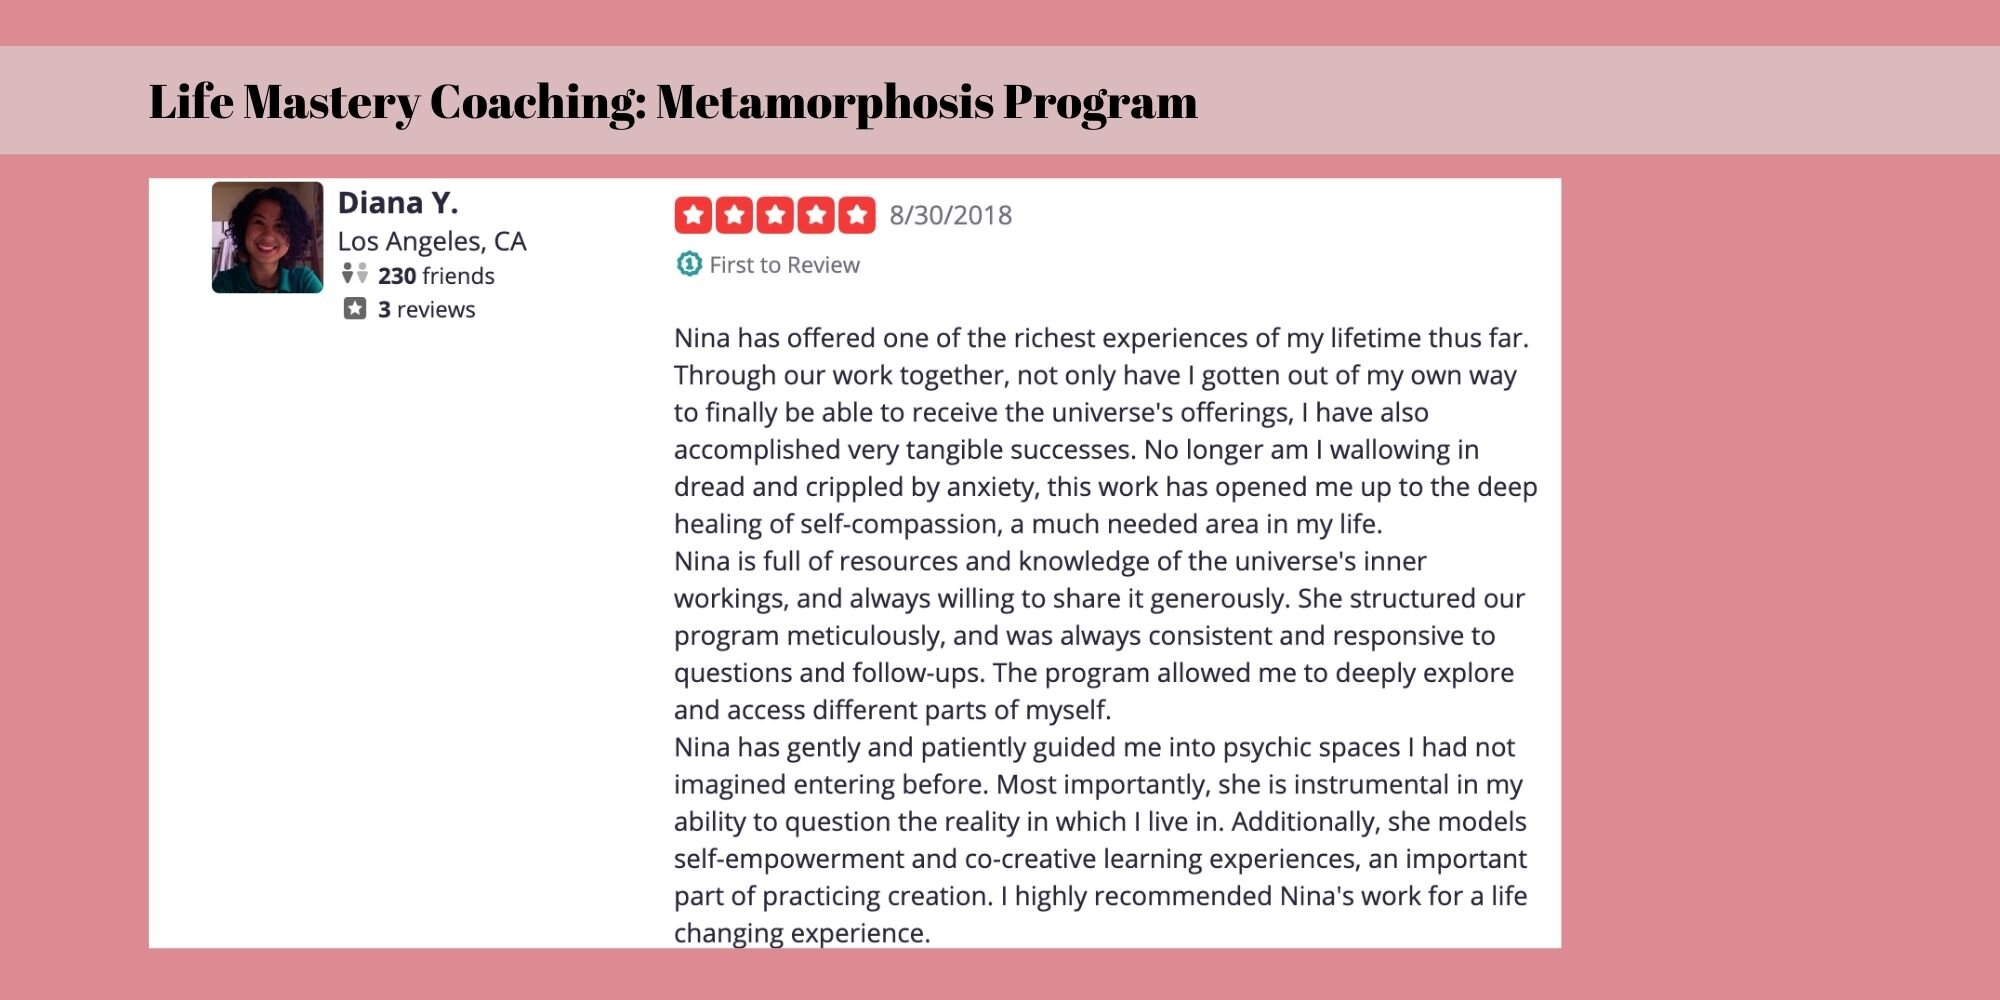 Diana - Life Mastery Coaching: Metamorphosis Program